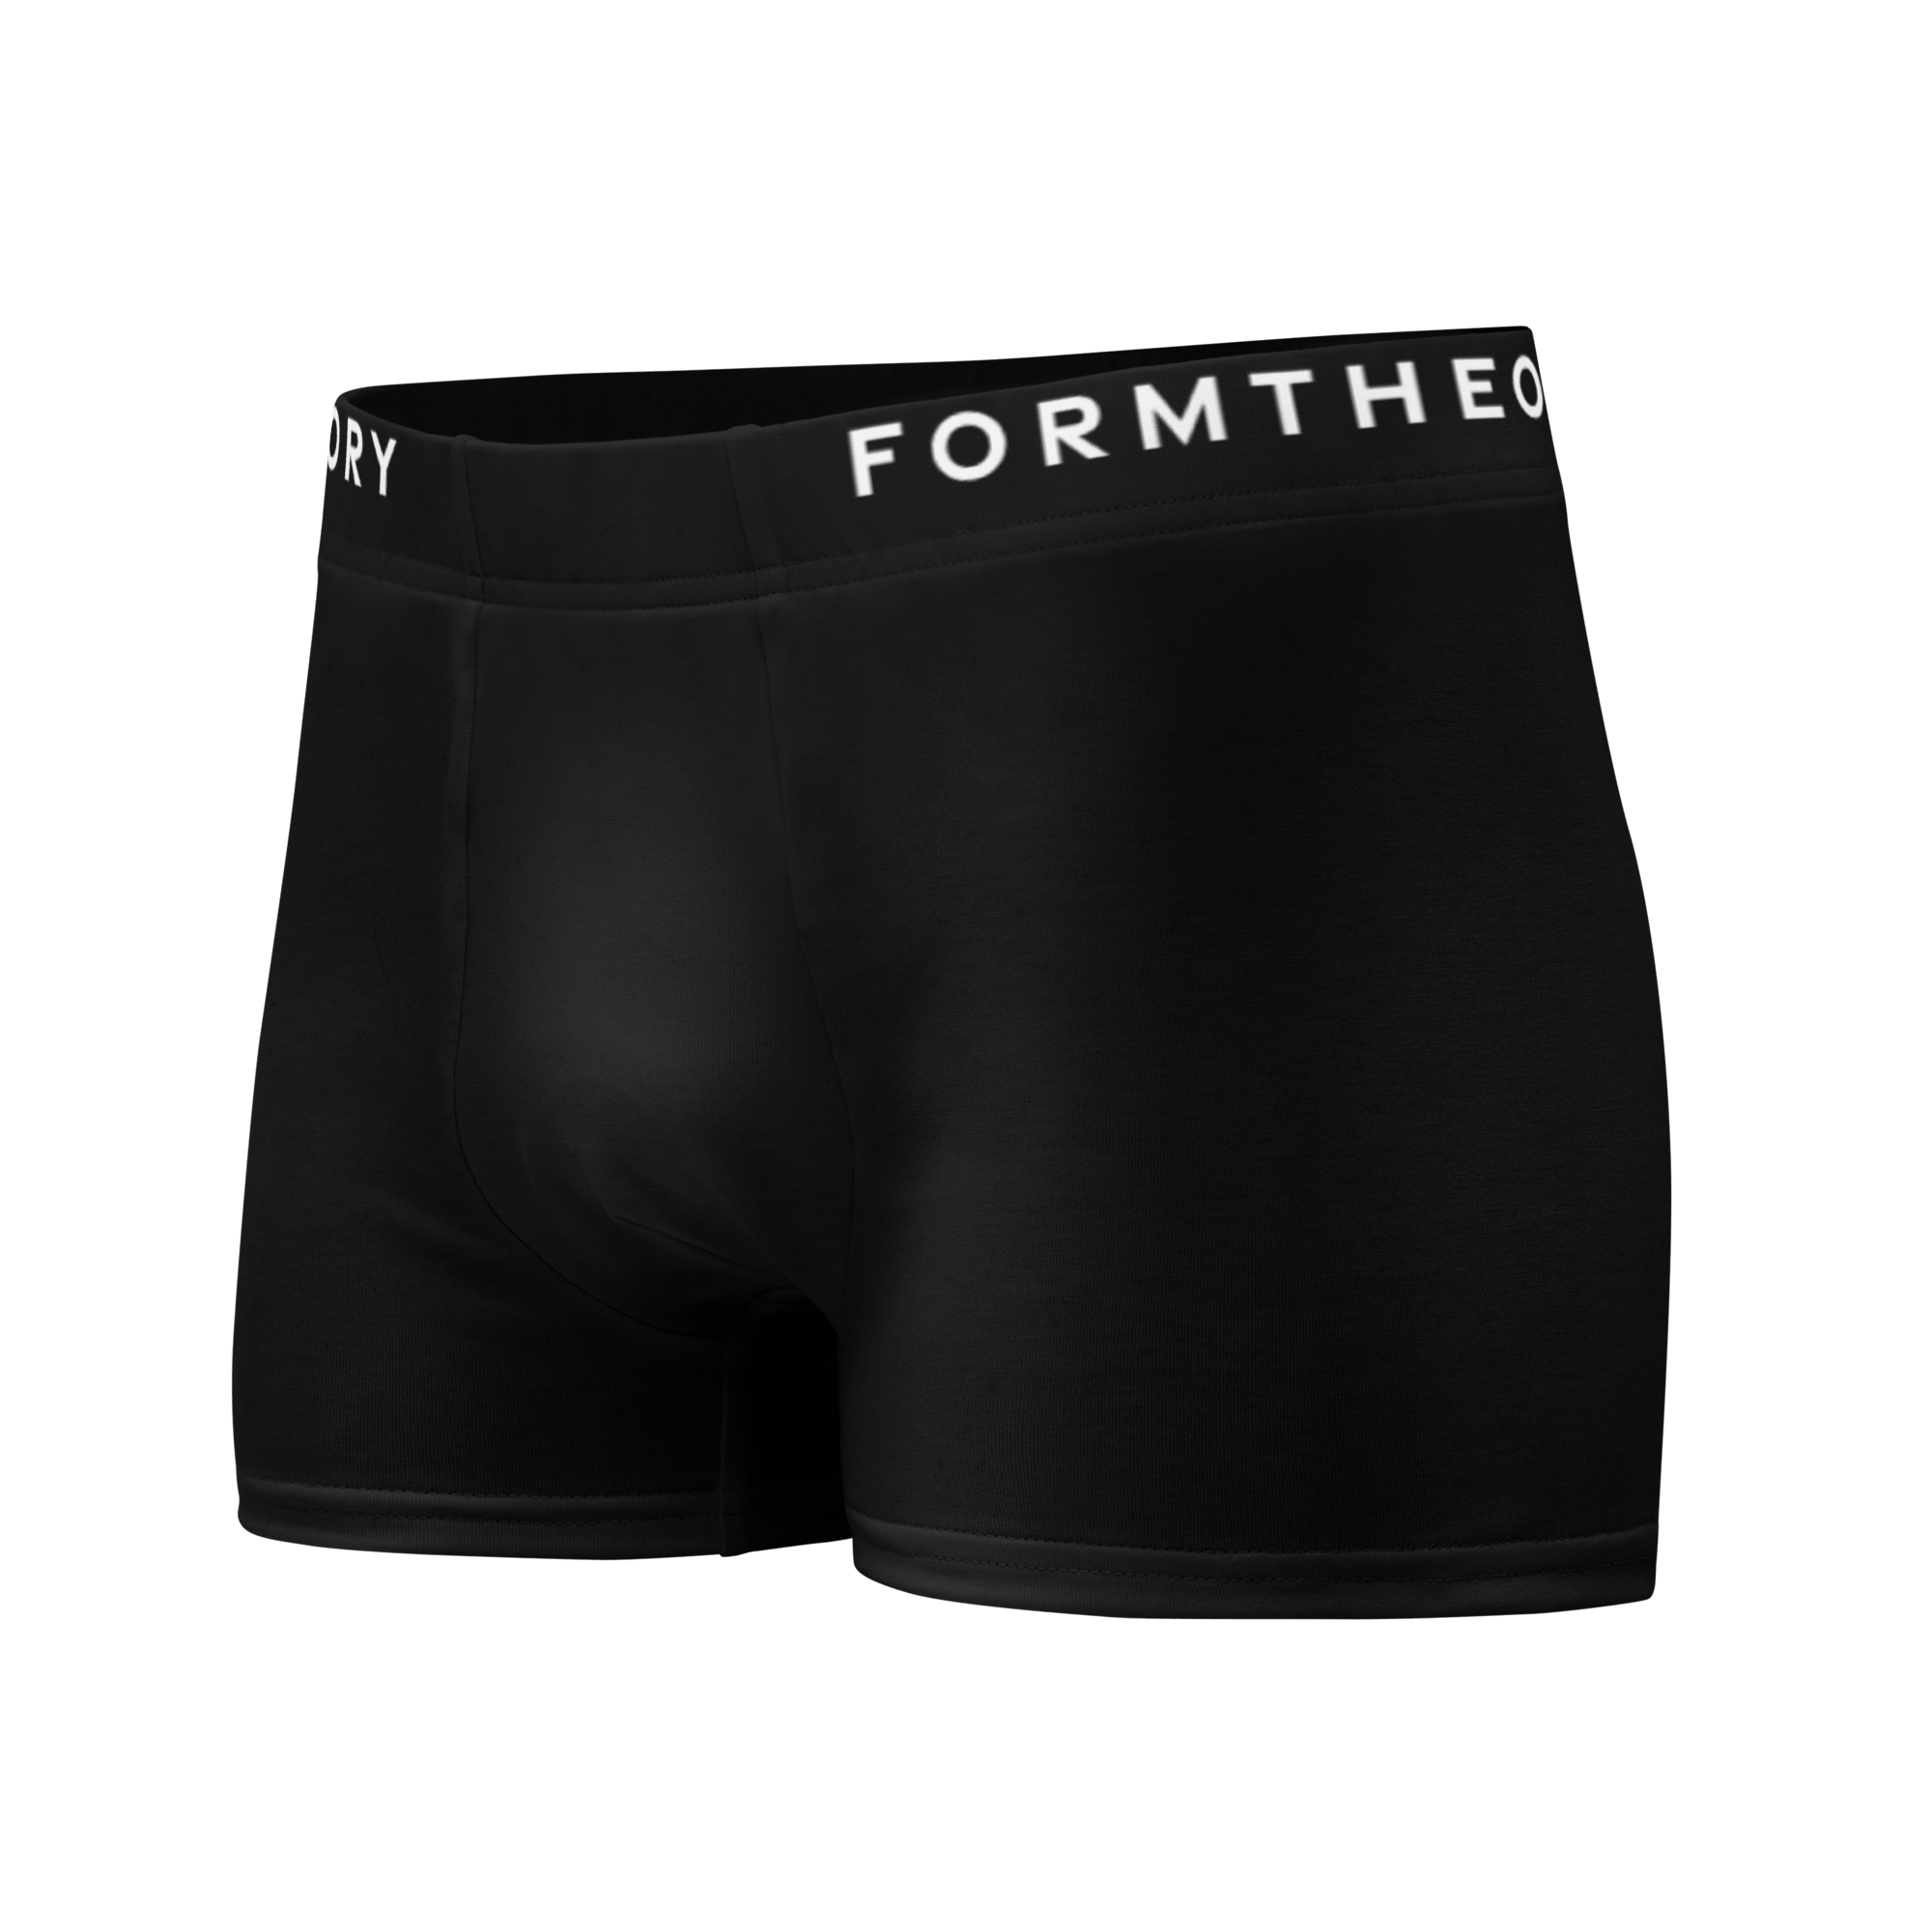 Boxer Briefs - FormTheory Athletics